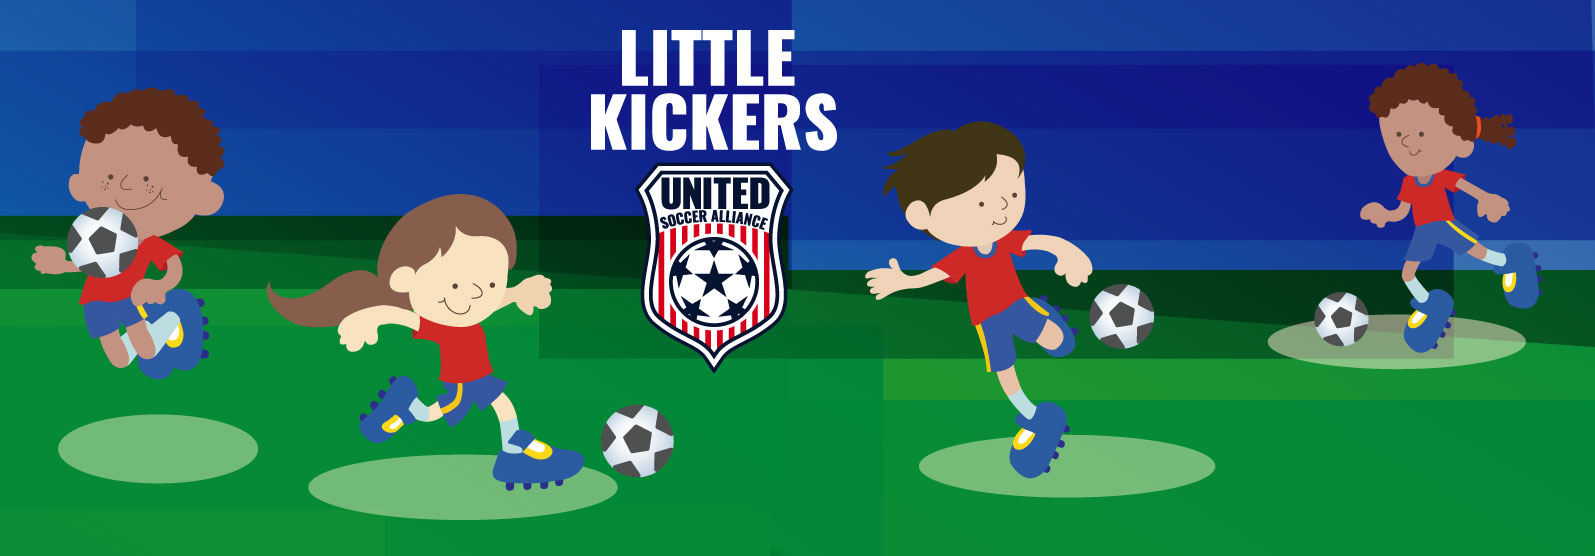 Little Kickers Program Graphic